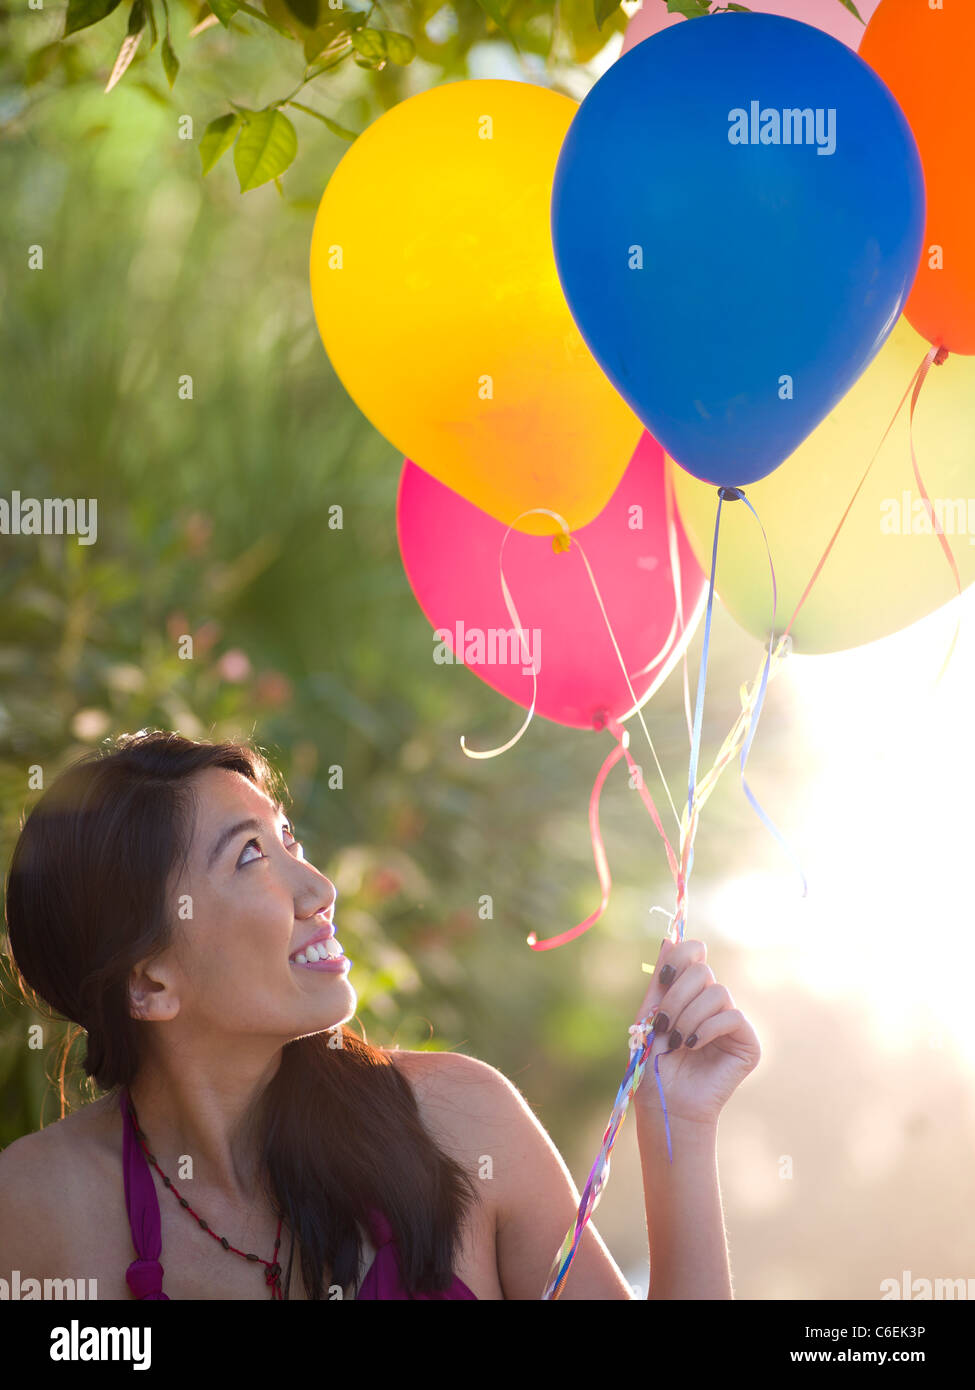 USA, Arizona, Scottsdale, Mid adult woman holding balloons Stock Photo